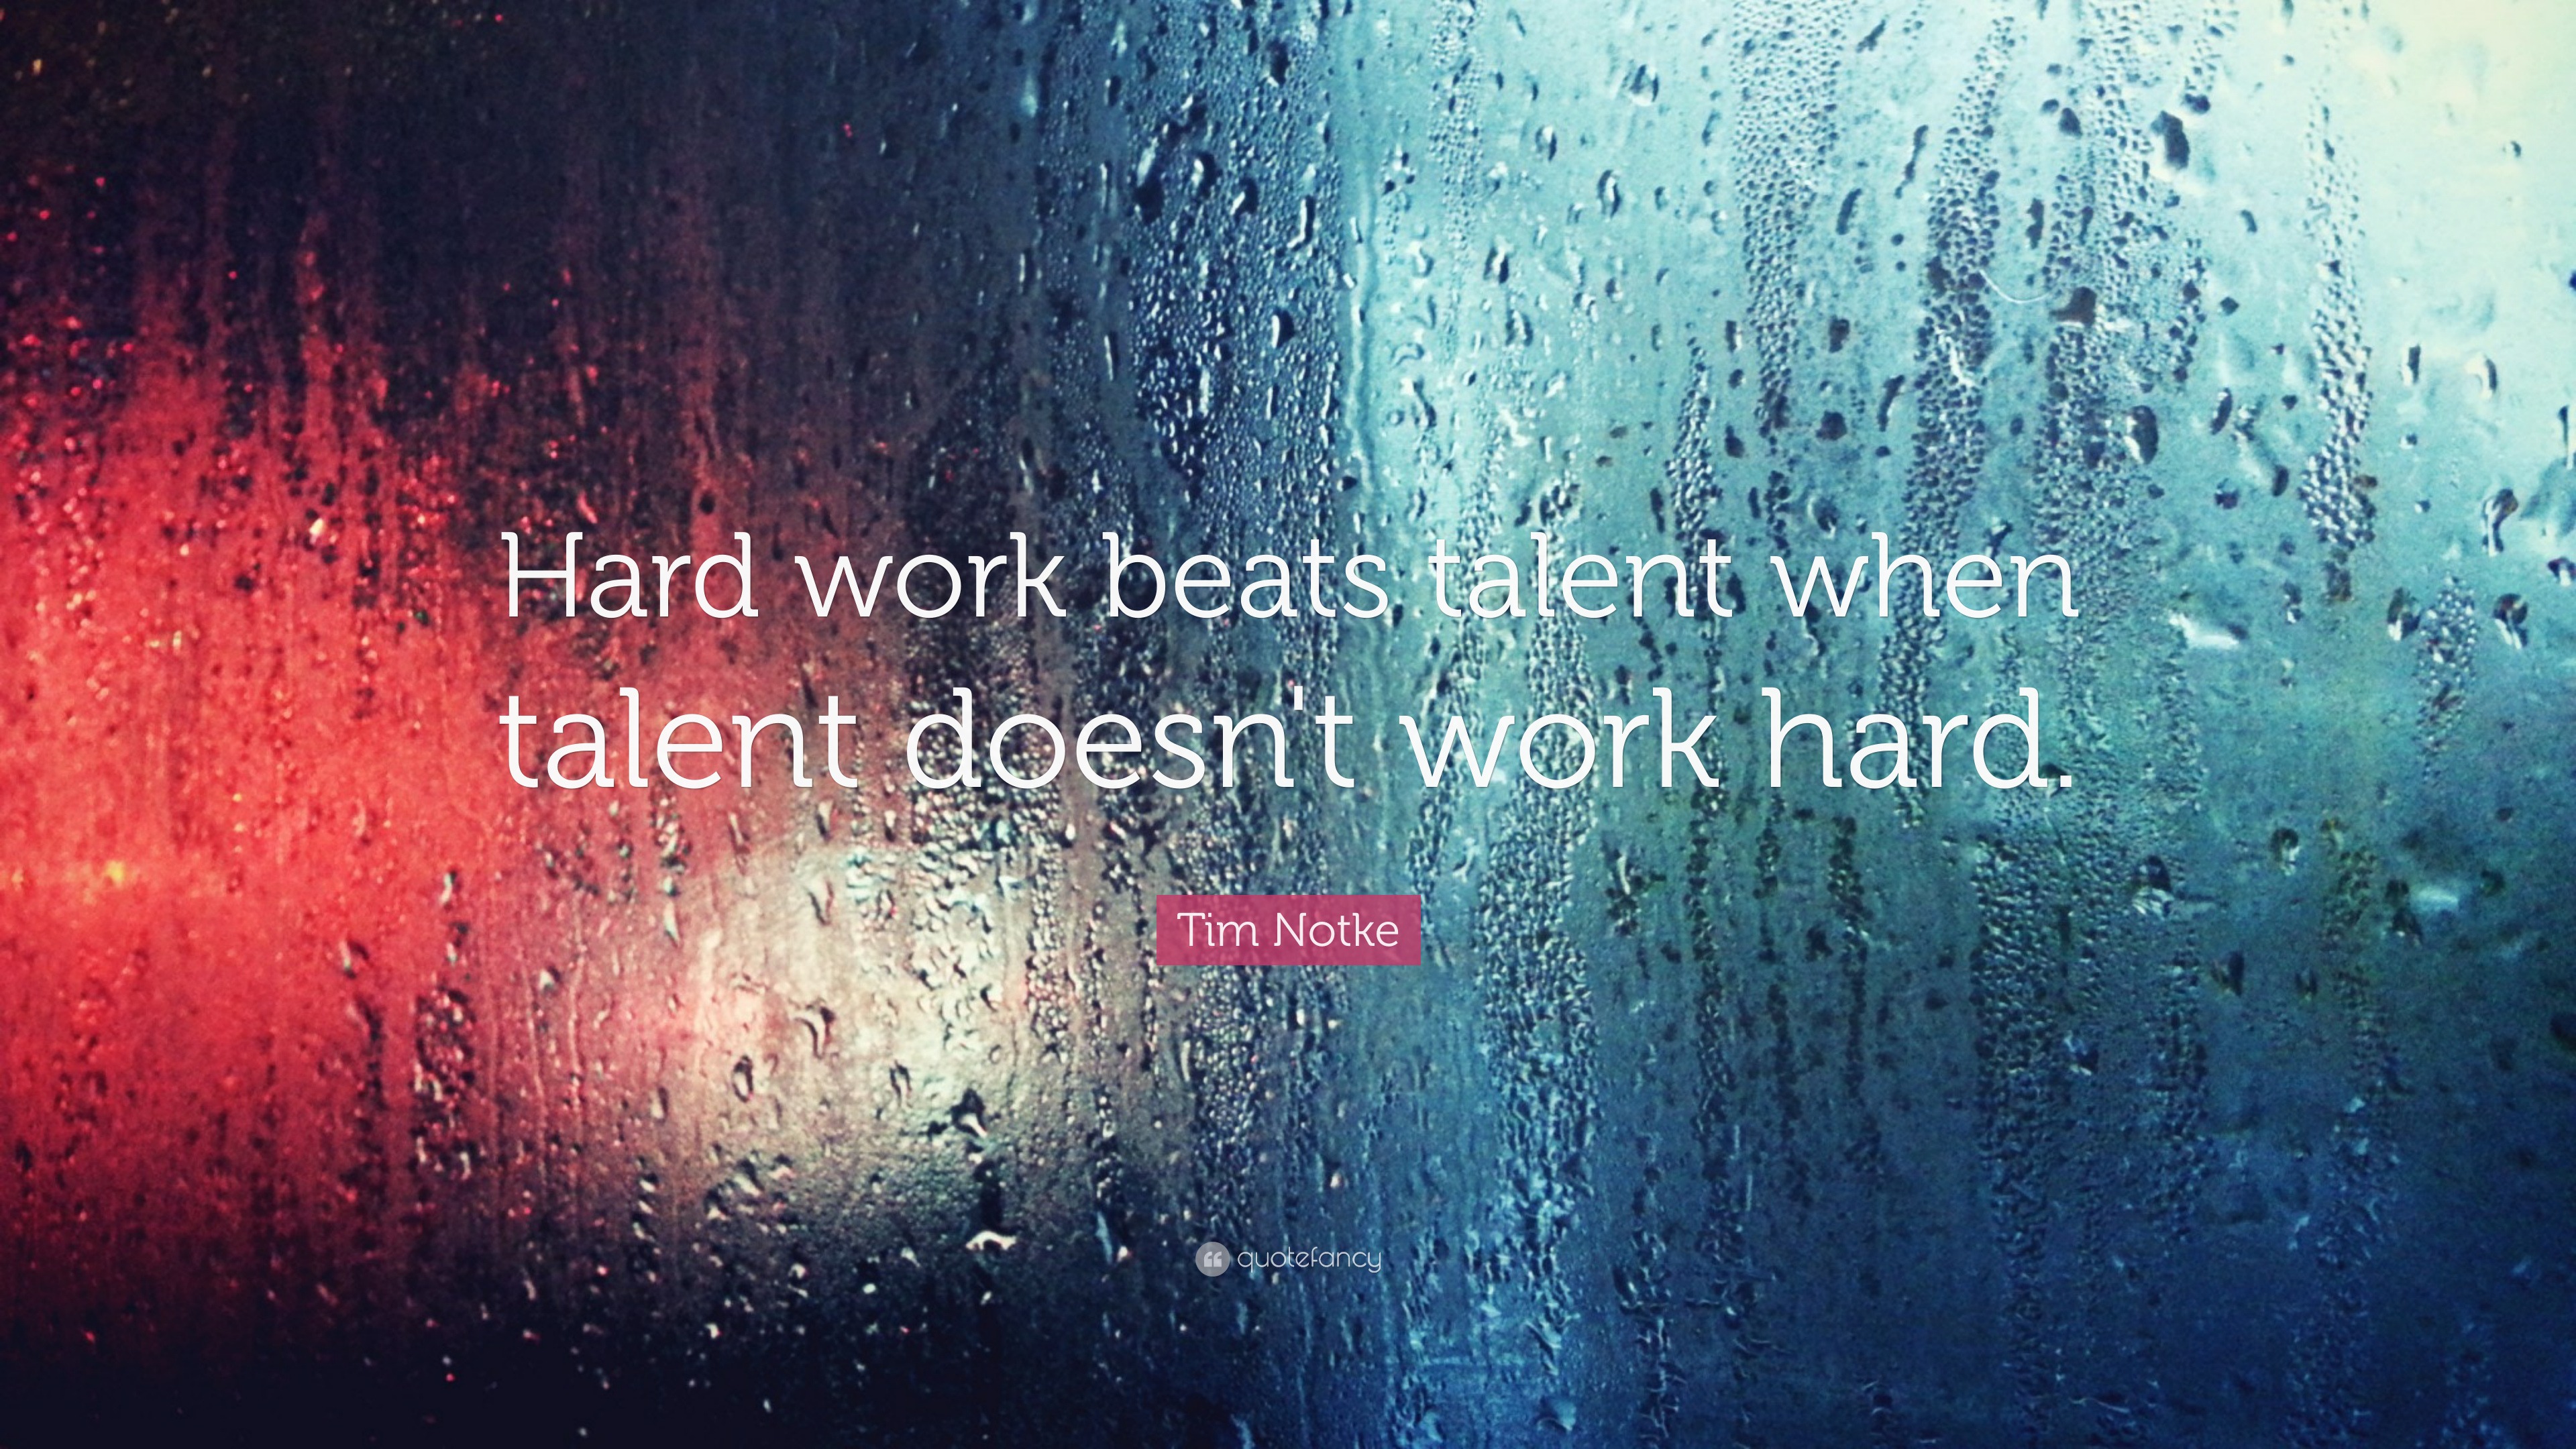 Tim Notke Quote: “Hard Work Beats Talent When Talent Doesn’t Work Hard.”